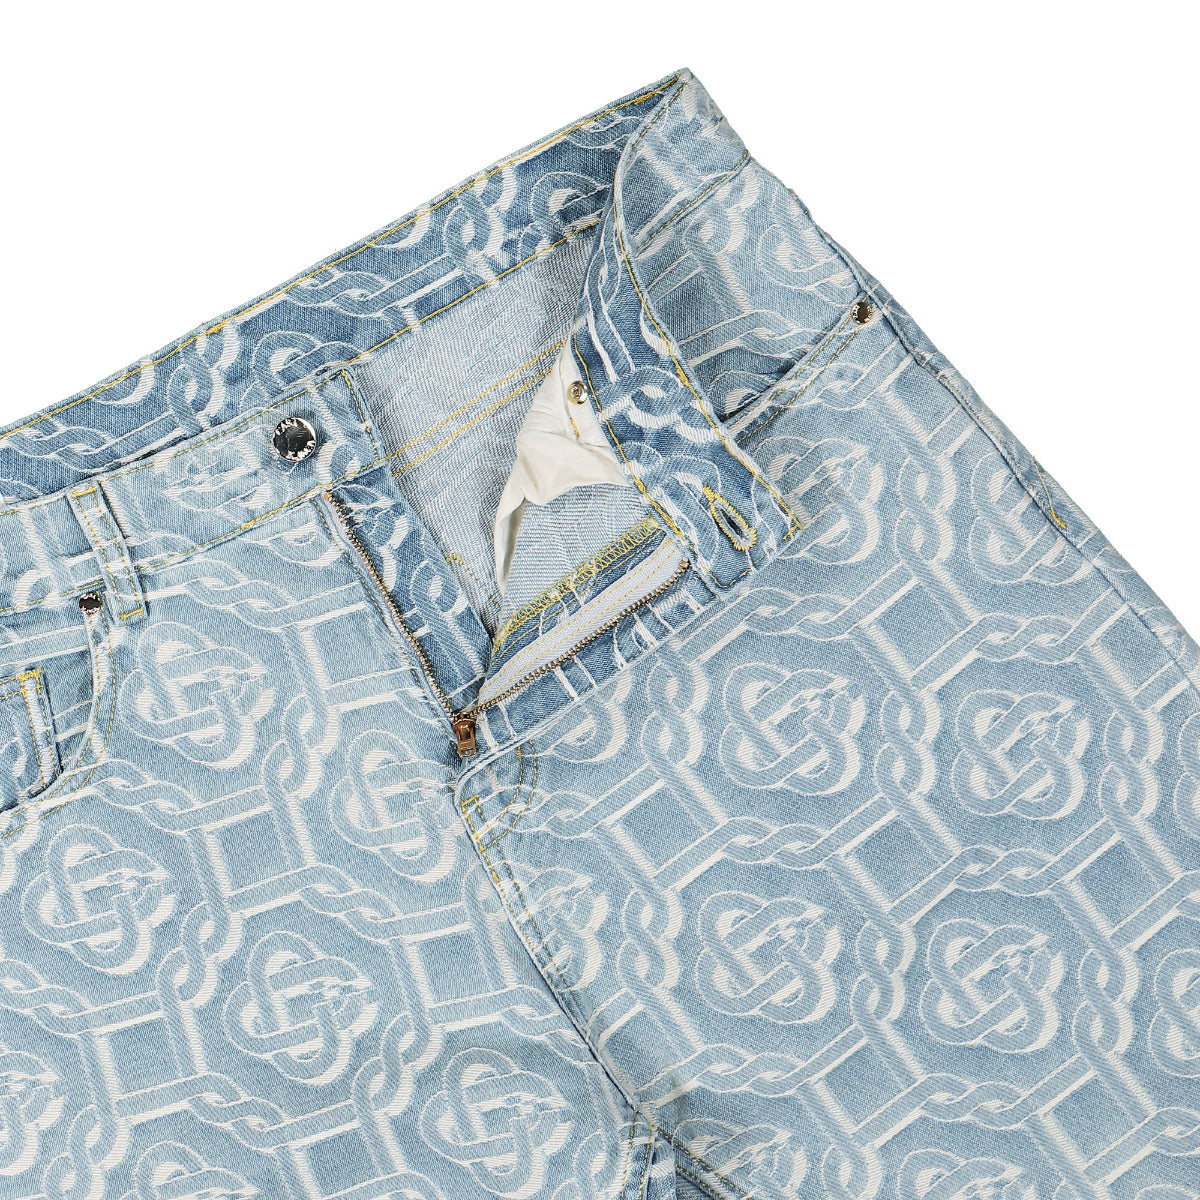 Casablanca Jacquard Denim Jeans